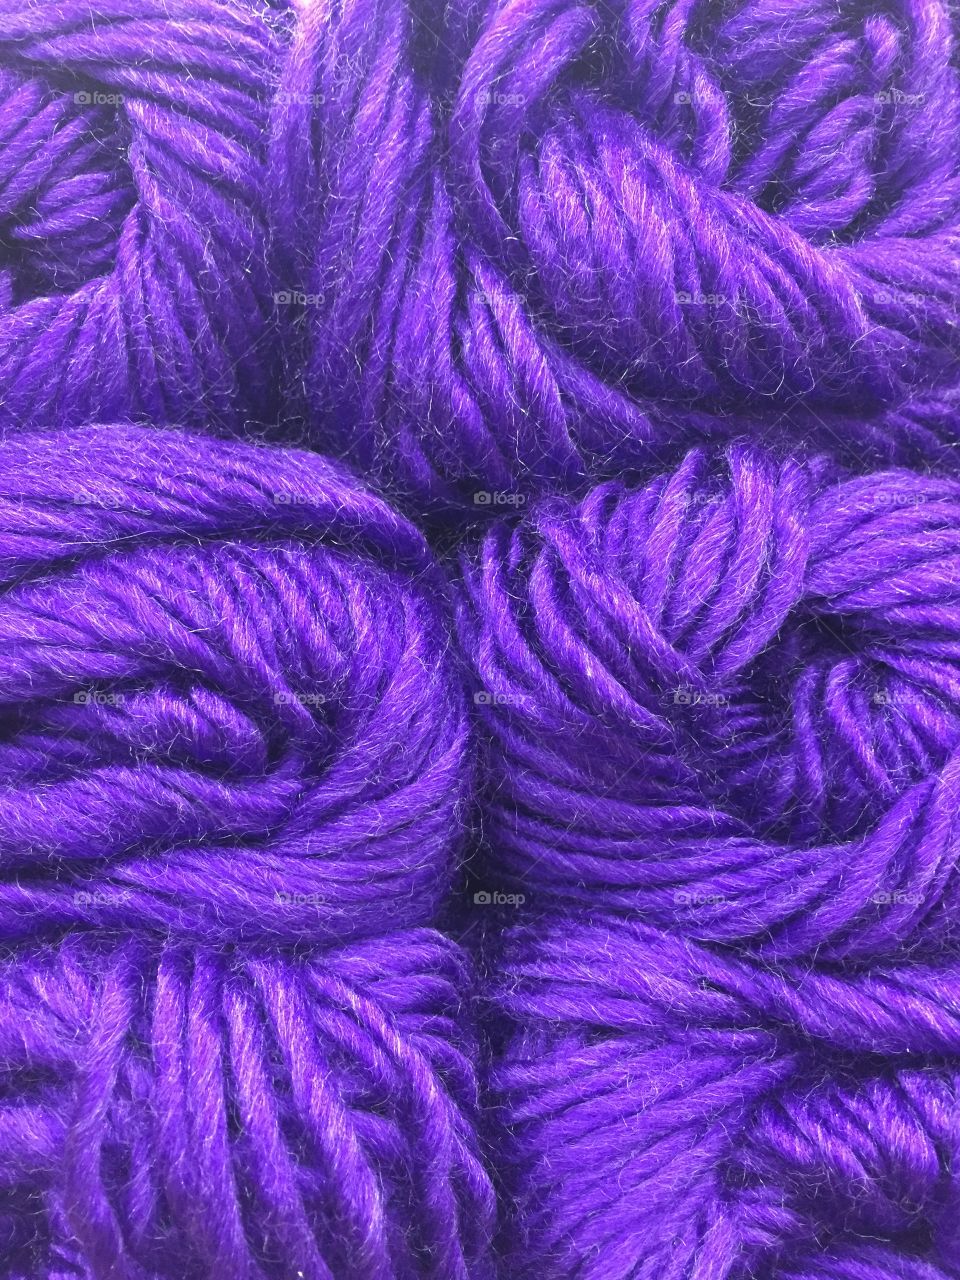 Close up of bundles of purple yarn.